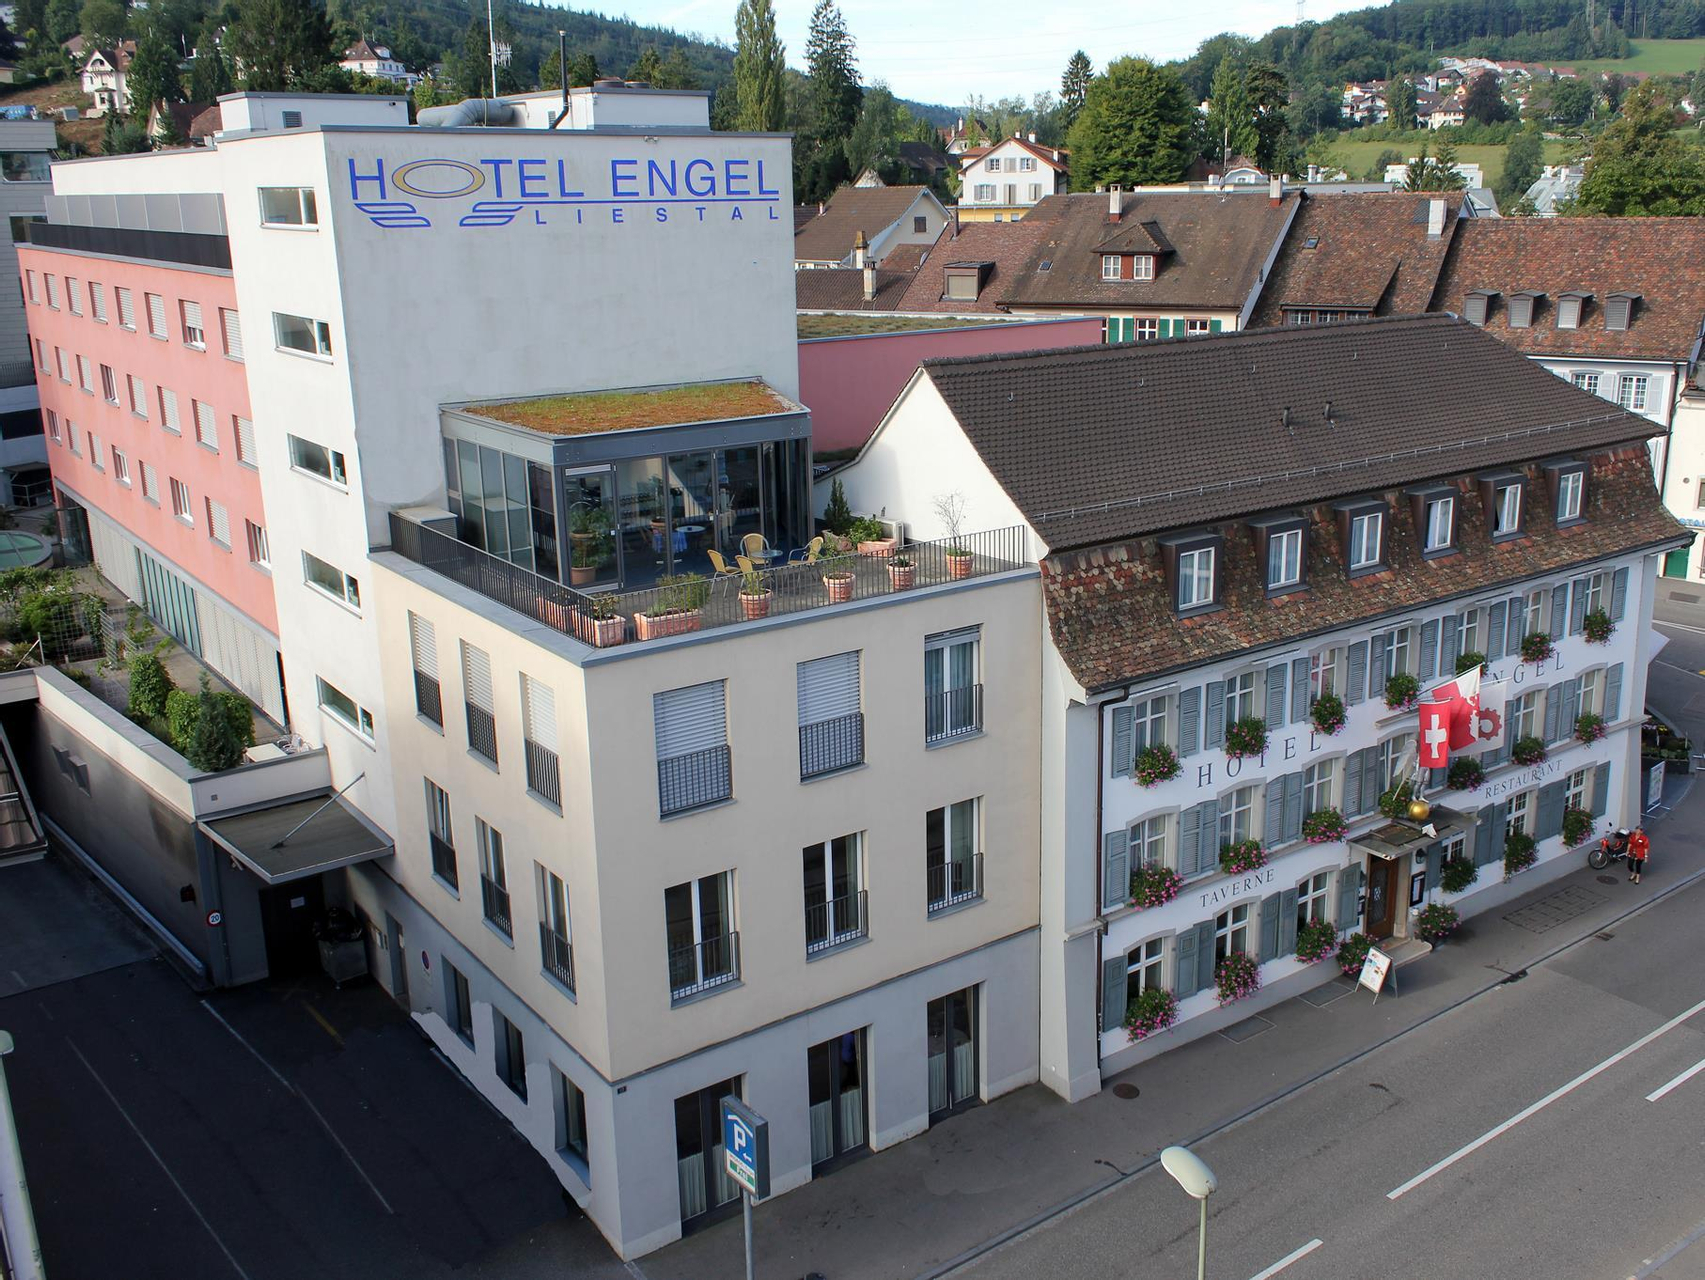 Hotel Engel, Liestal